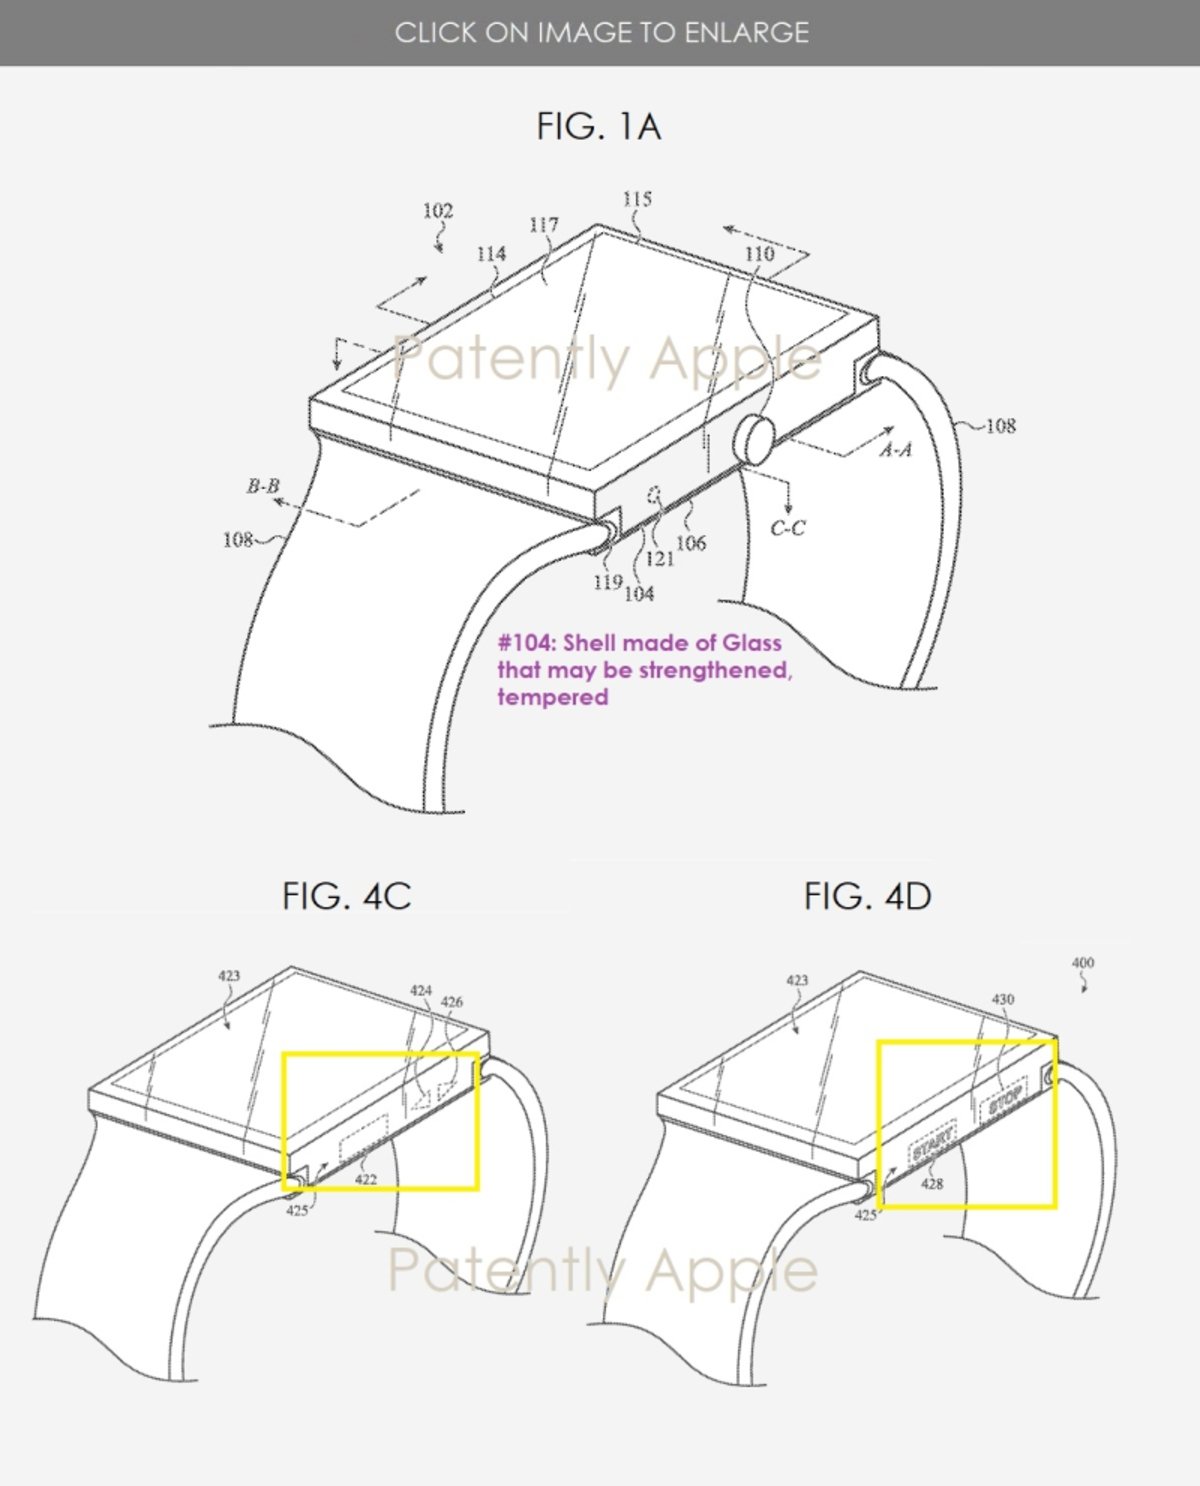 Patente Apple Watch